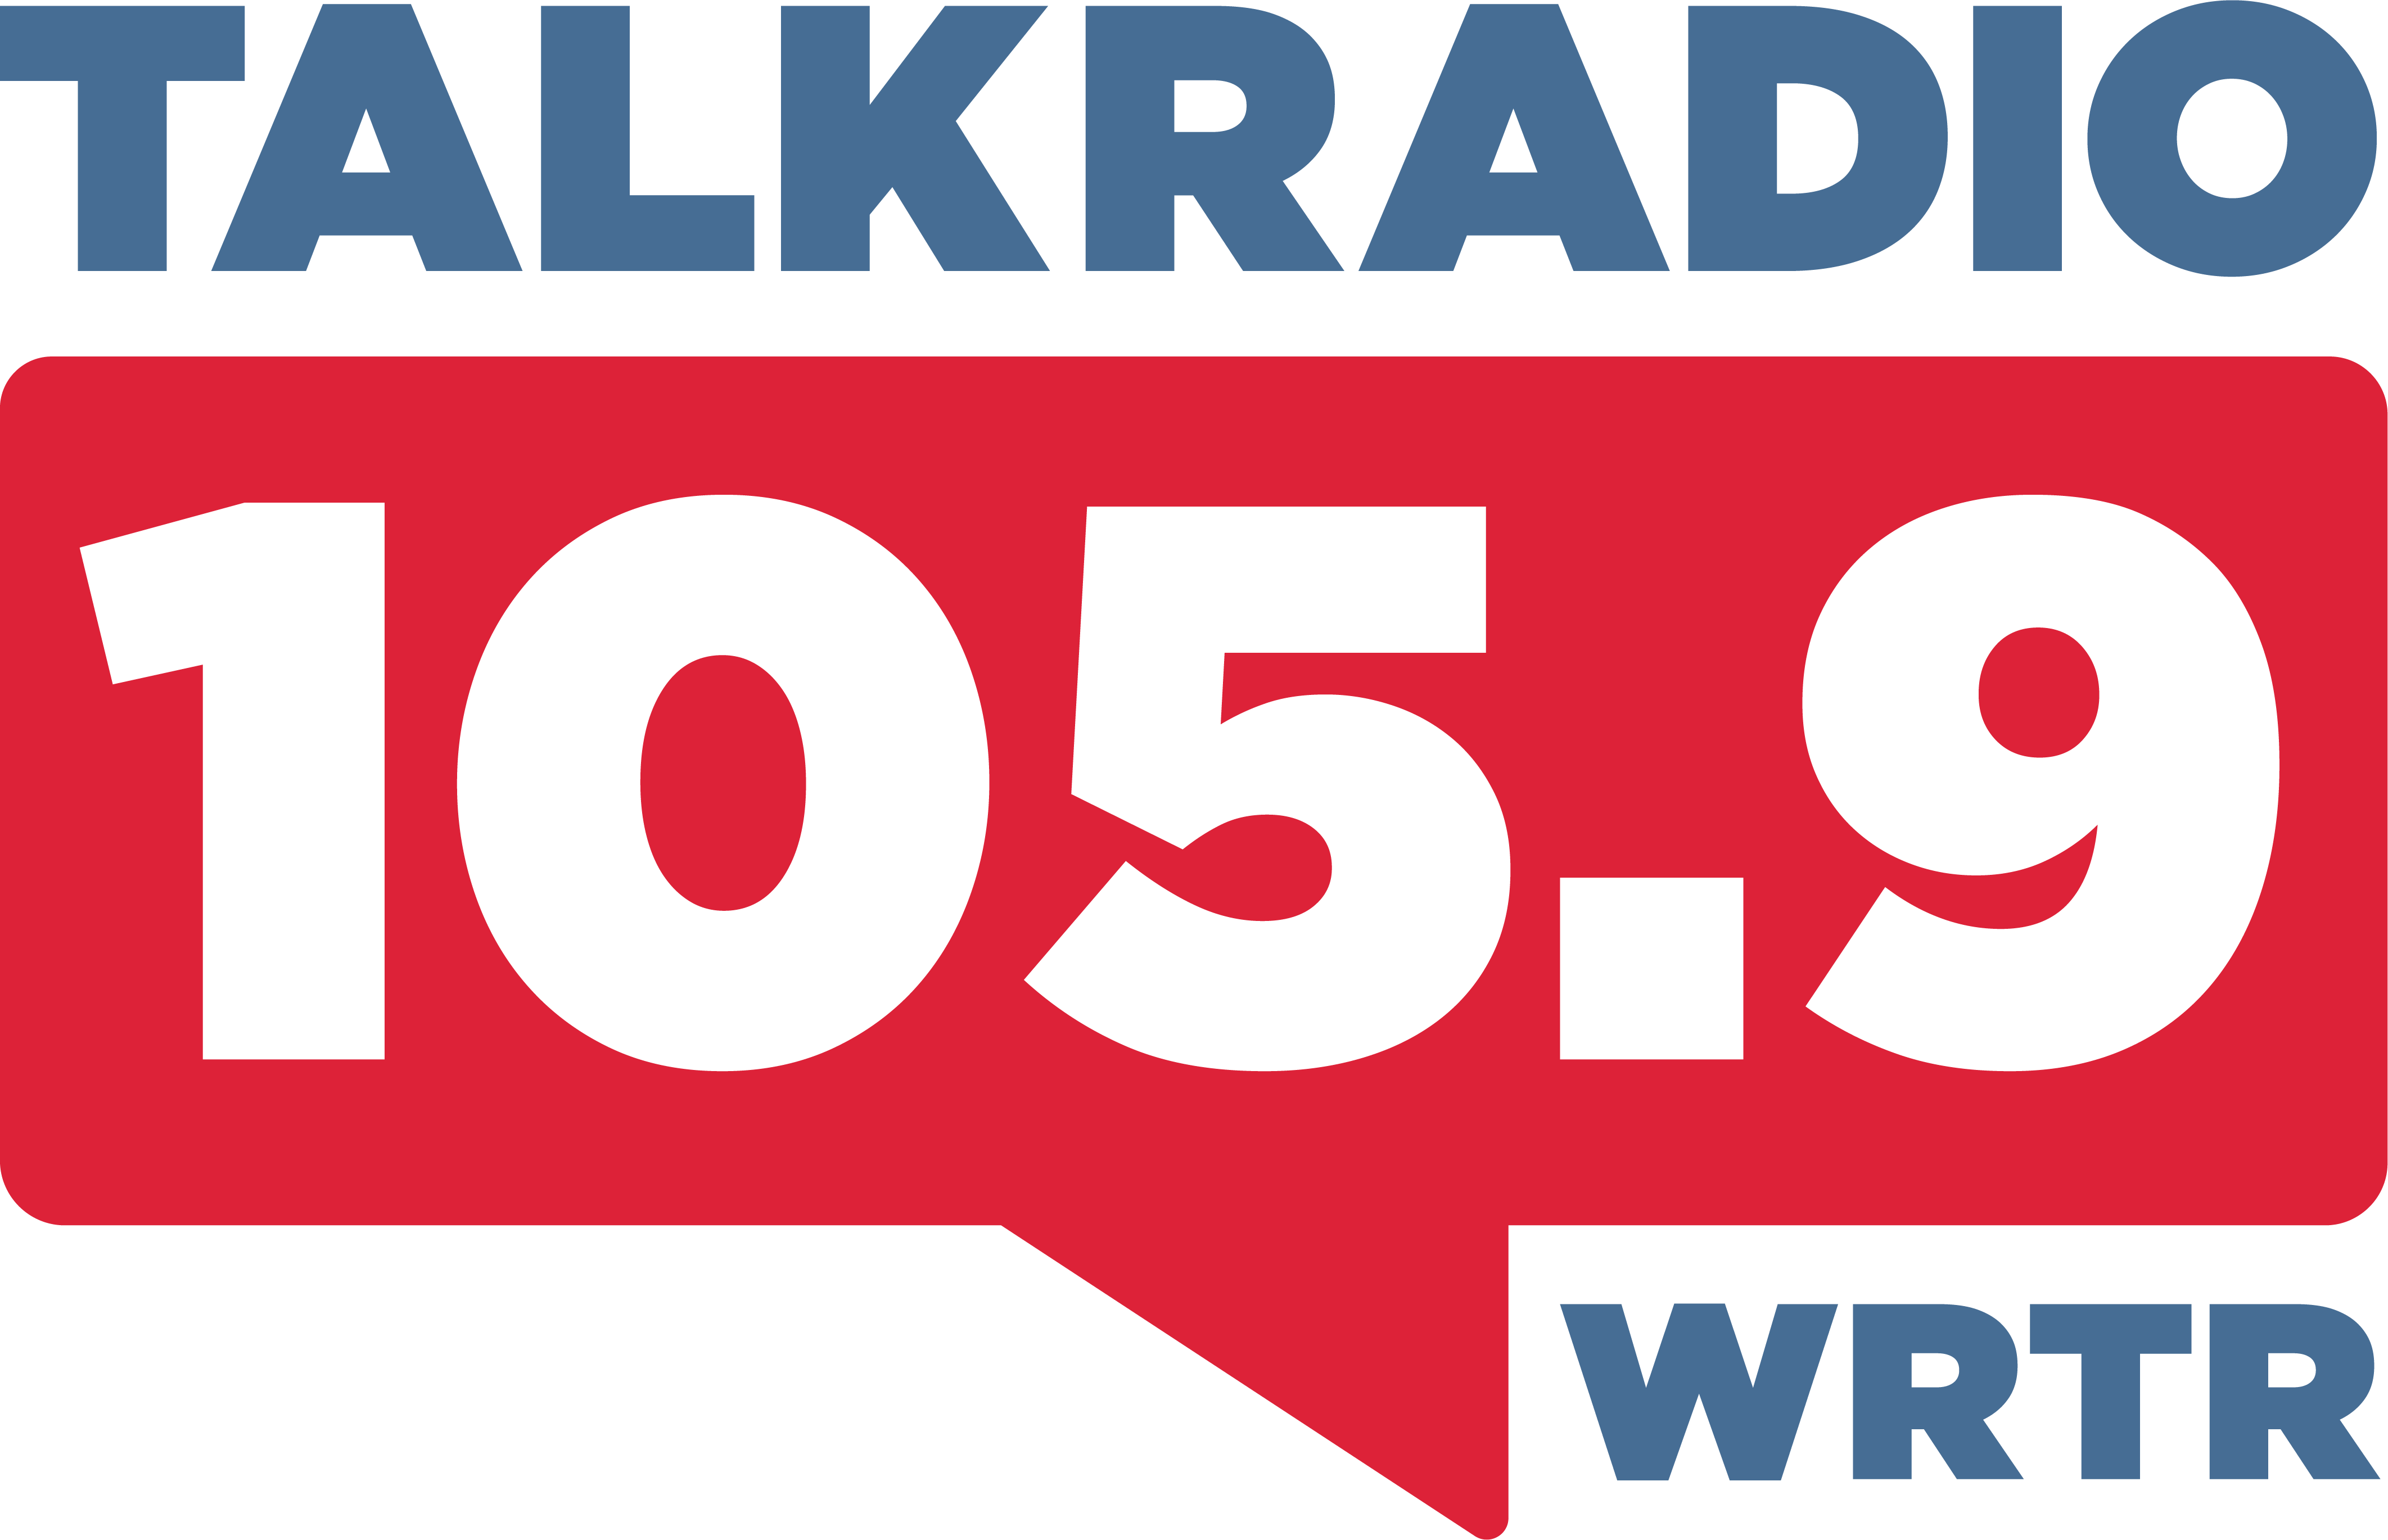 Радио черкесска 105.9. Radio Talker.